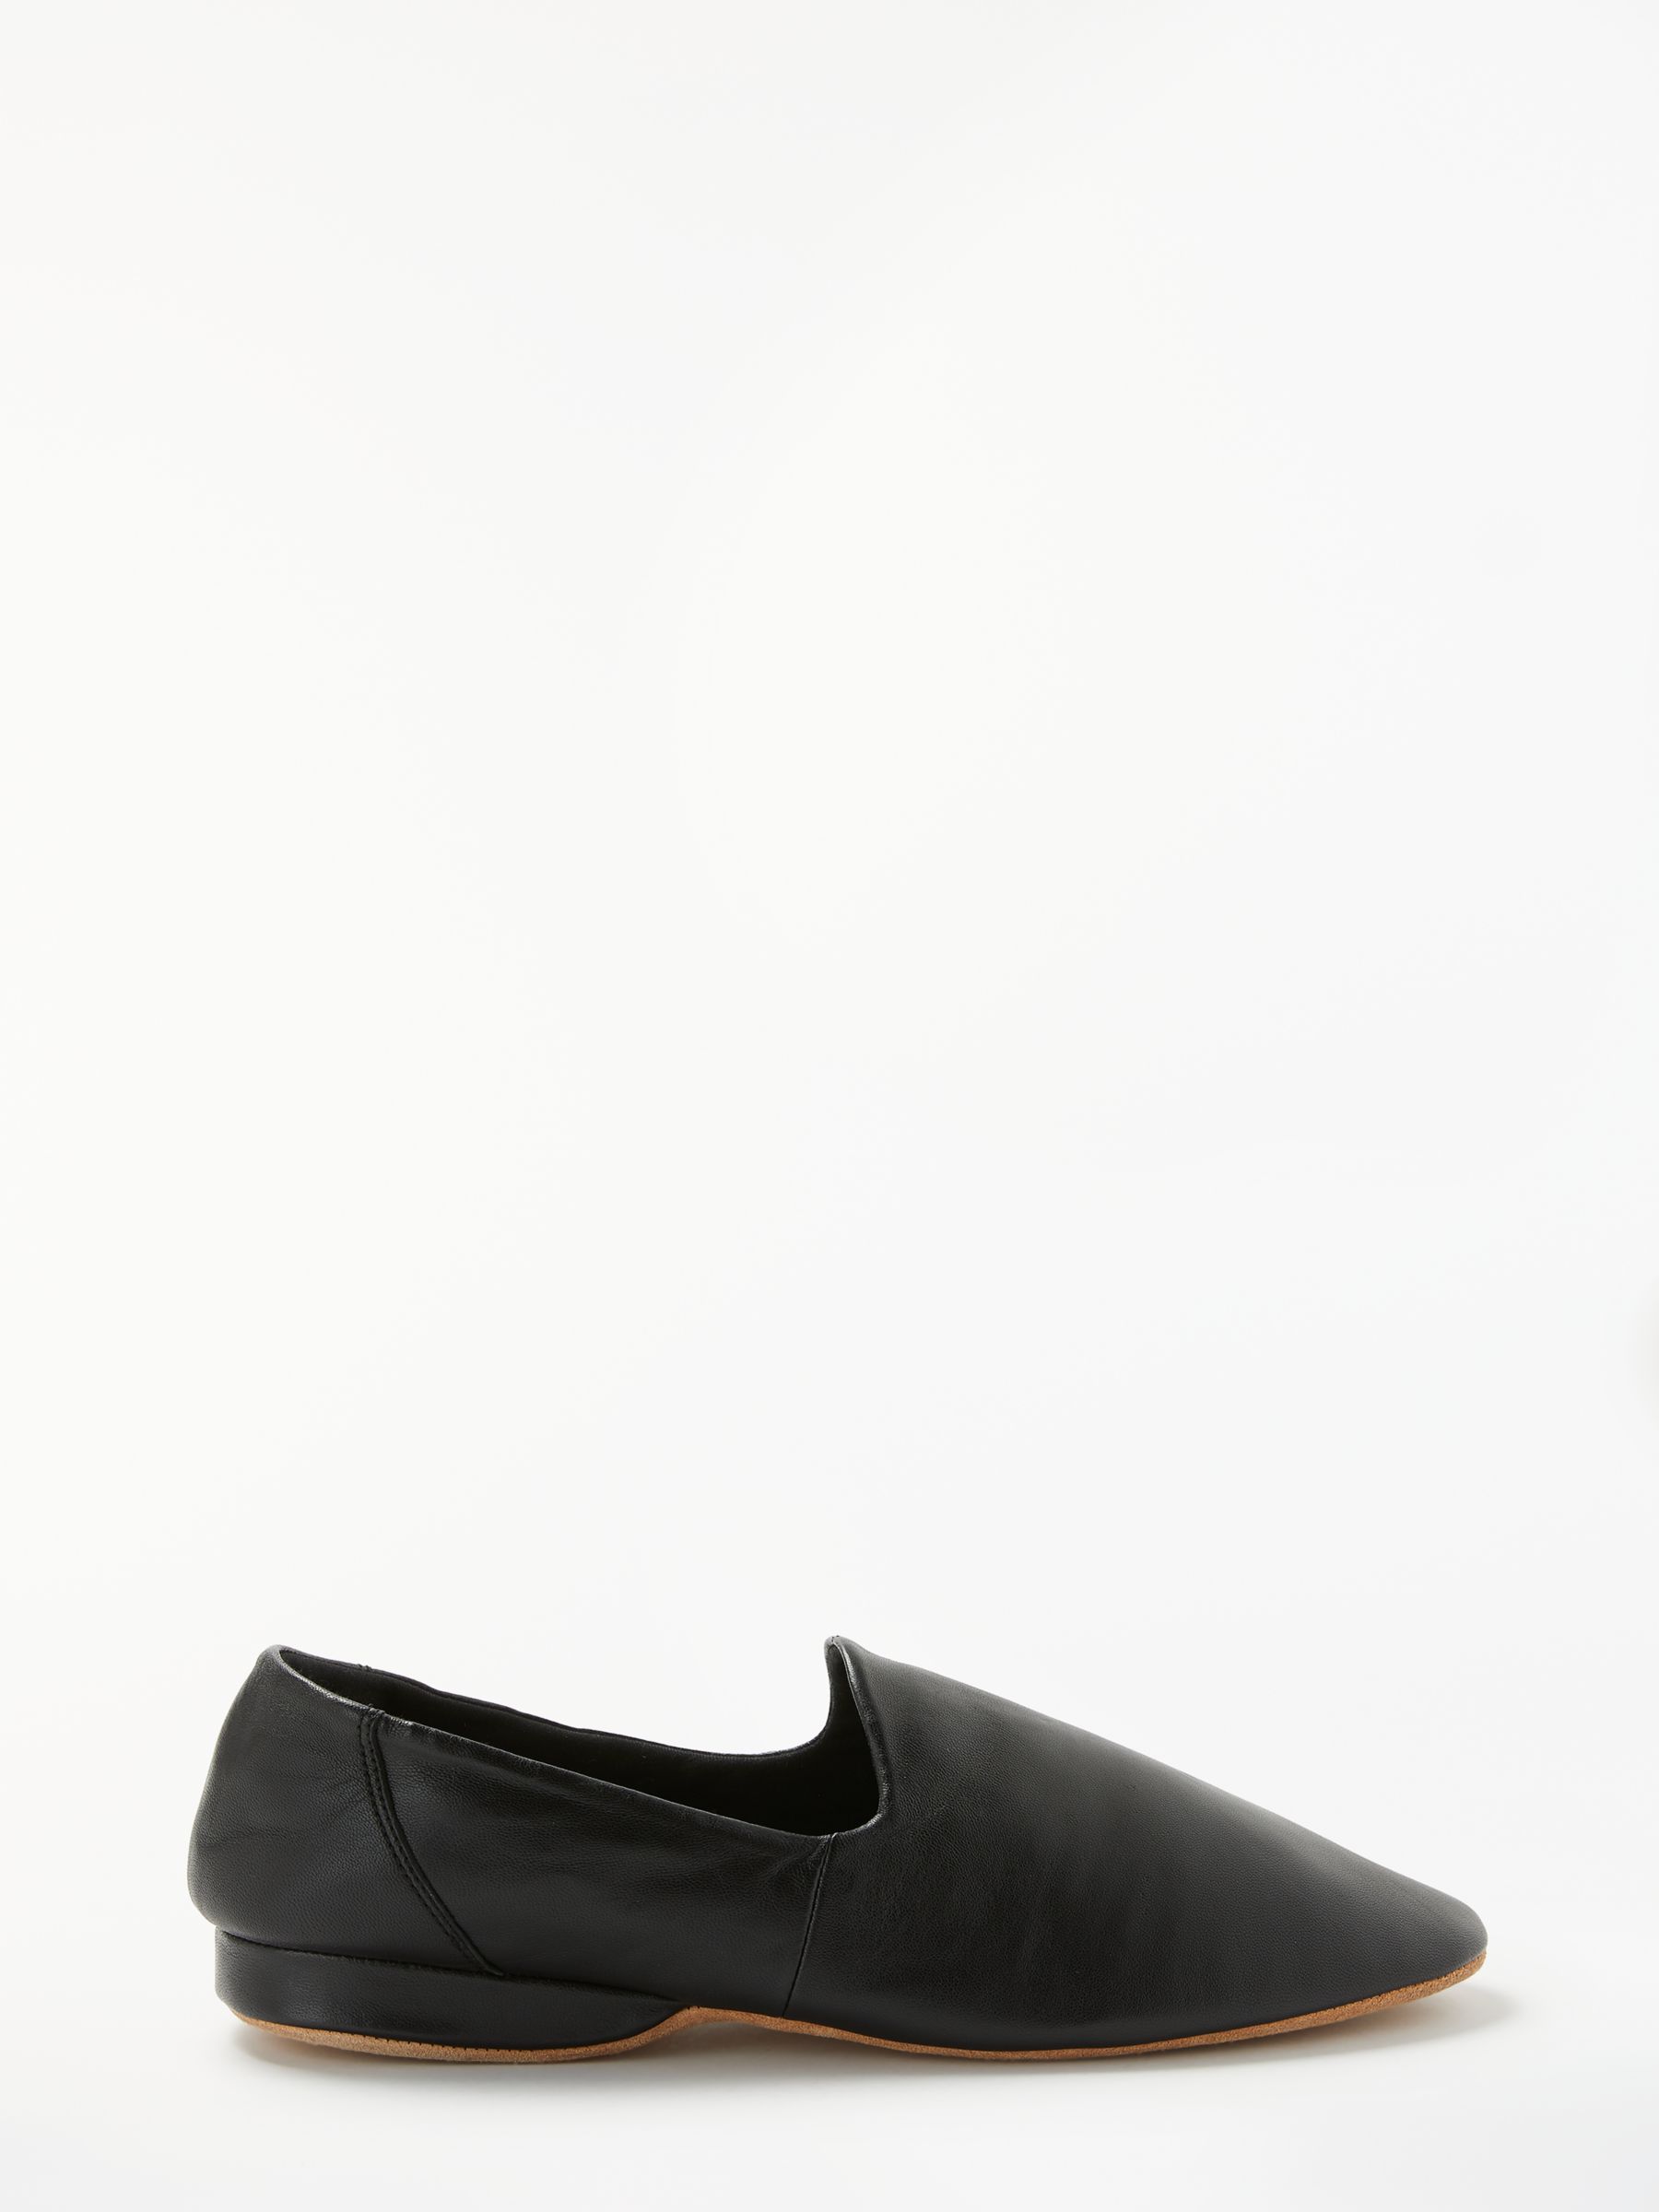 John Lewis & Partners Seville IV Leather Slippers, Black